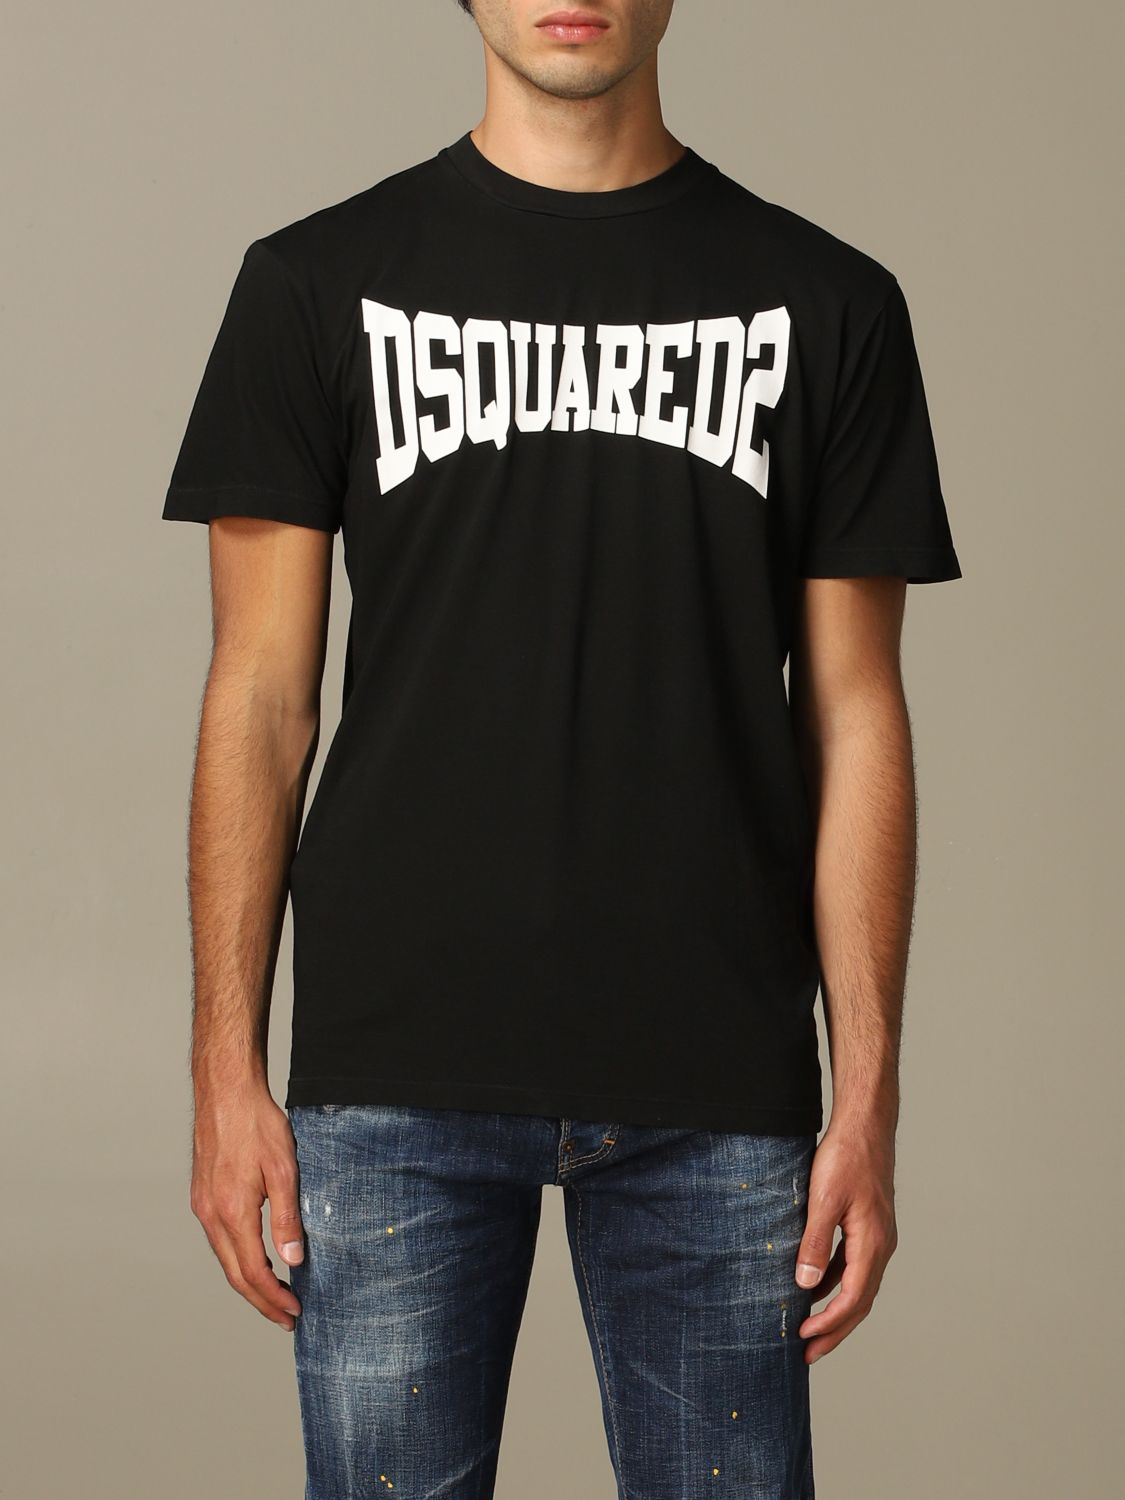 dsquared t shirt 2016